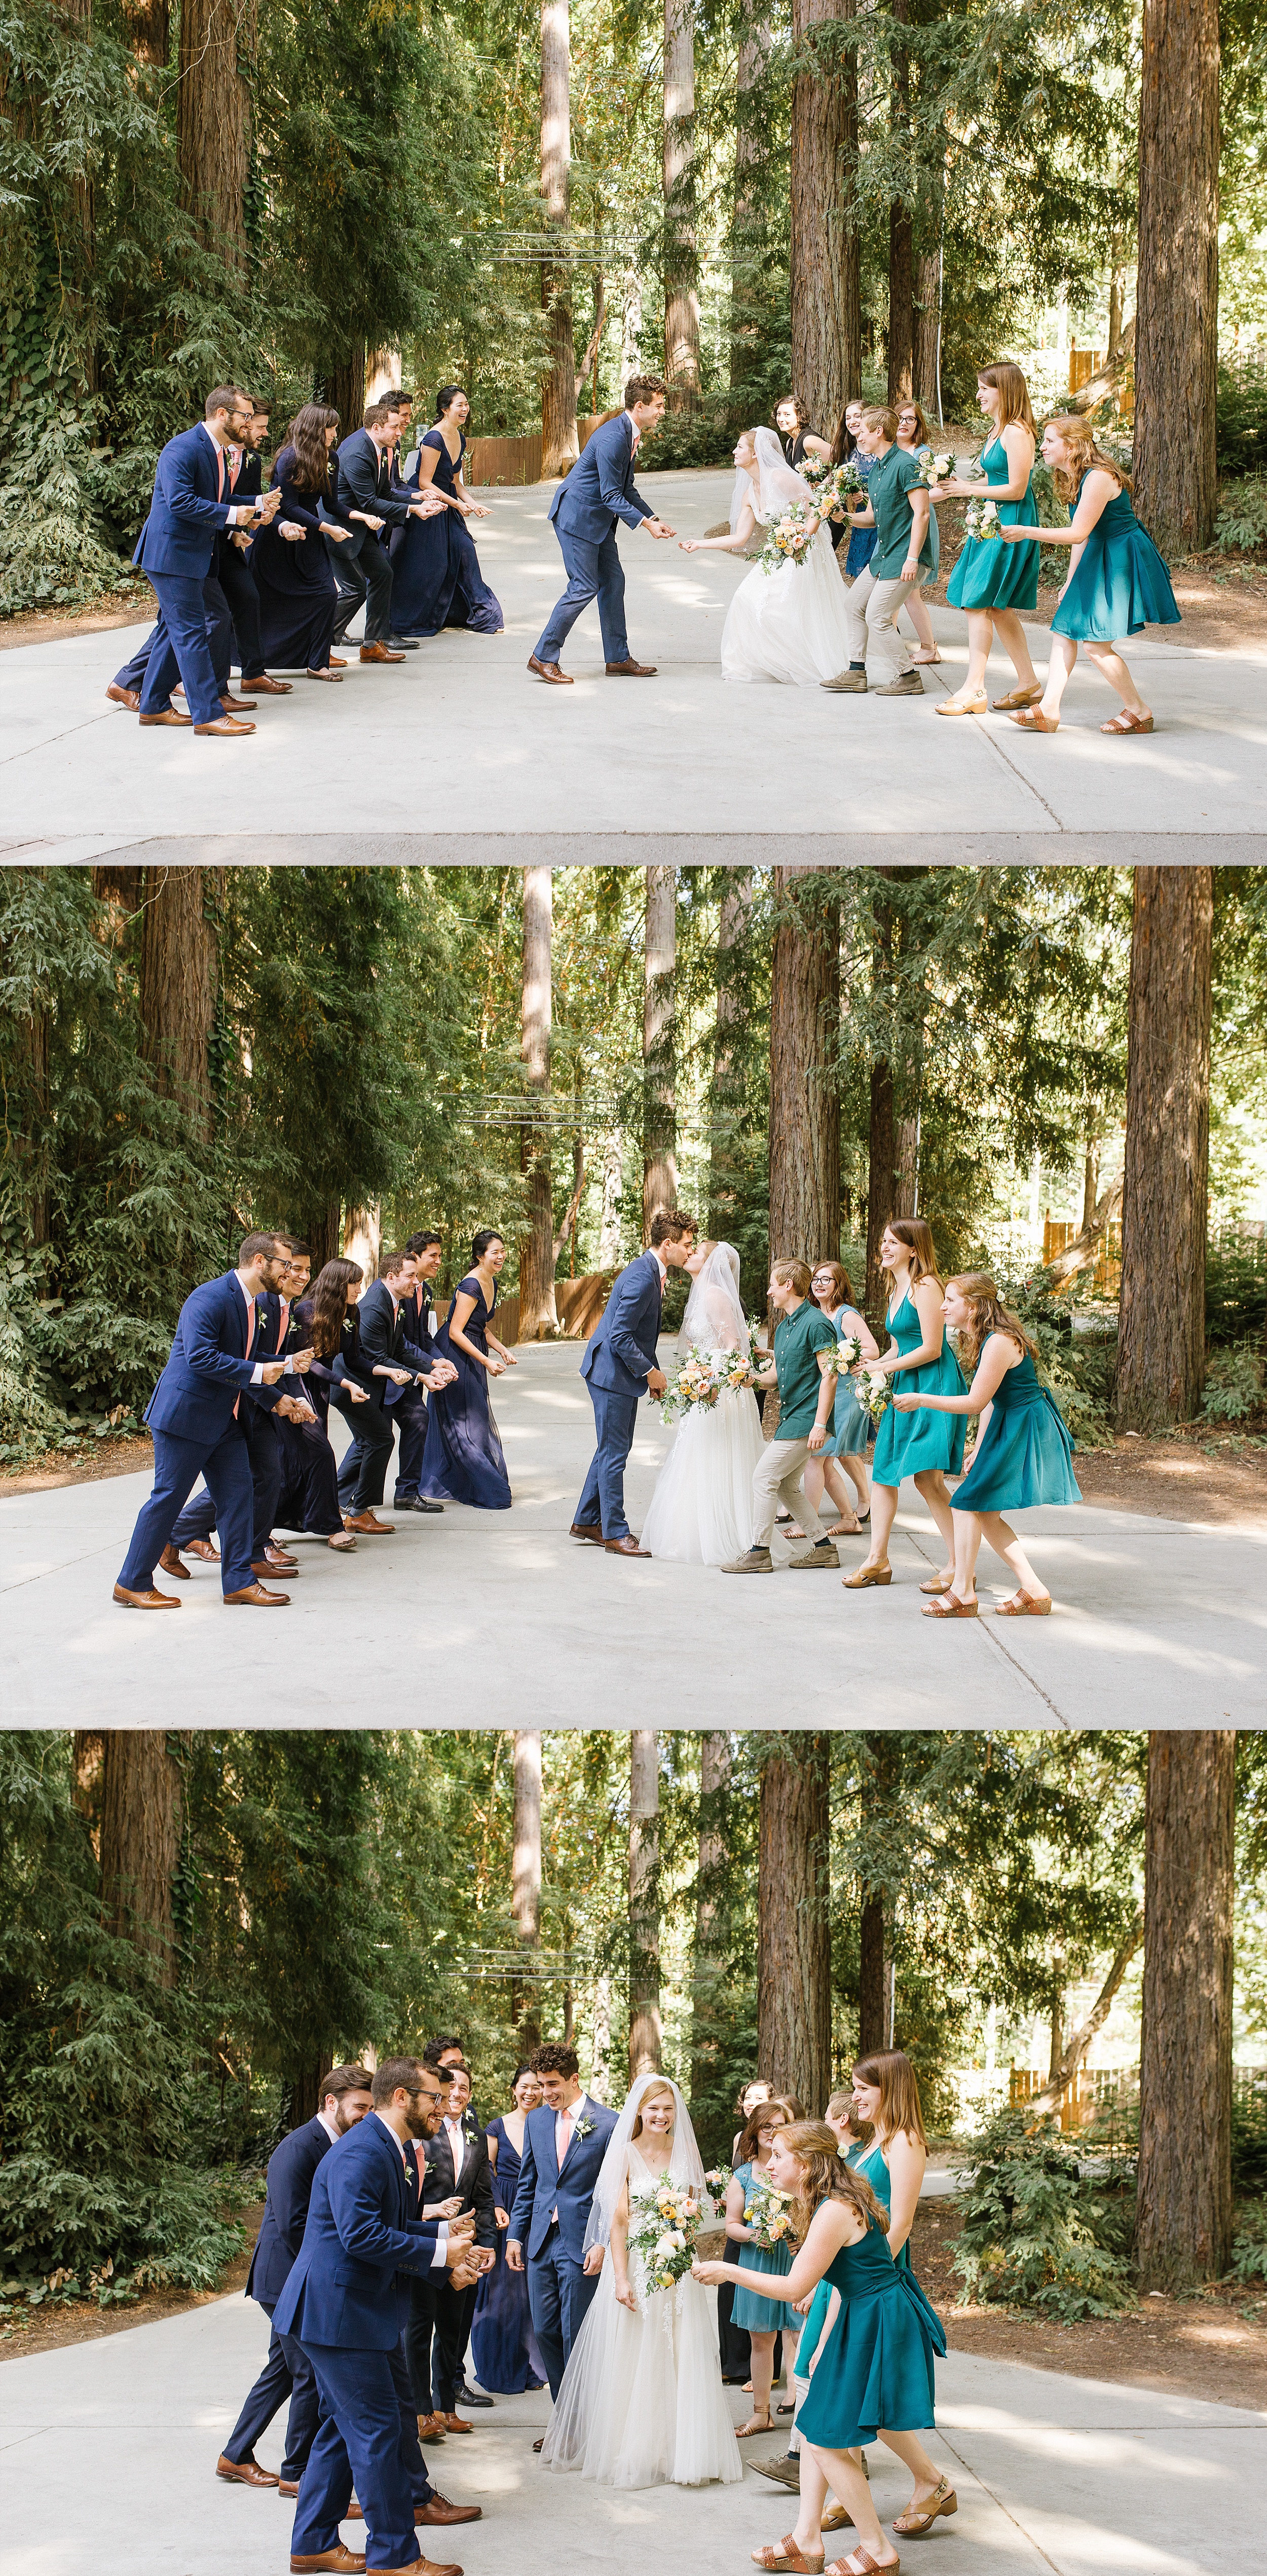 Amphitheatre-of-the-Redwoods-wedding-erikariley_chelsea-dier-photography_0057.jpg